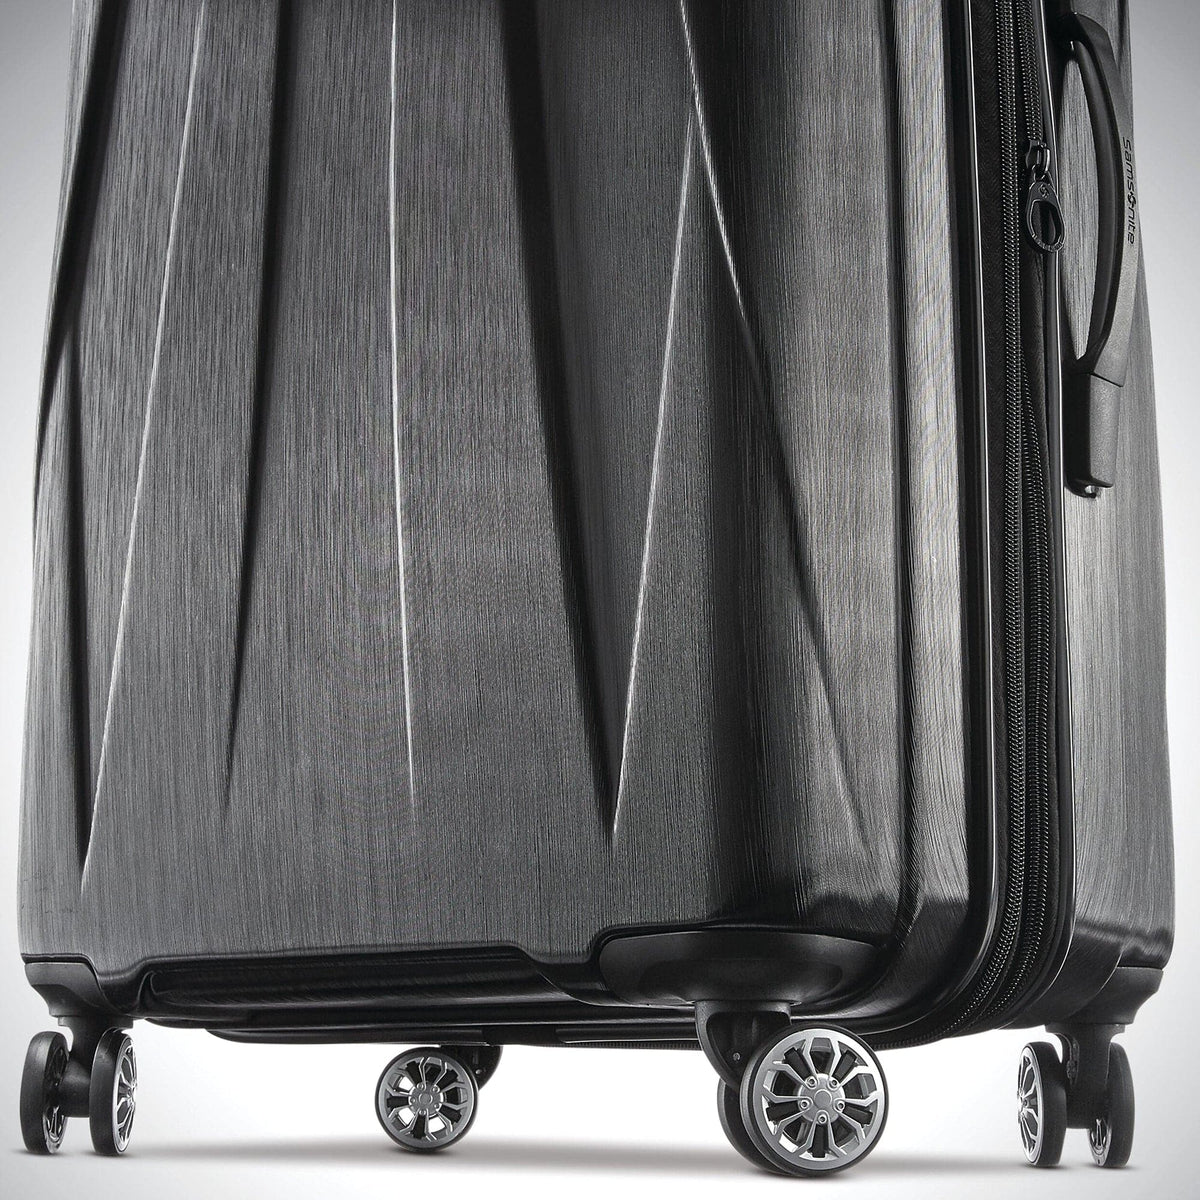 Samsonite Centric 2 3 Piece Set Luggage